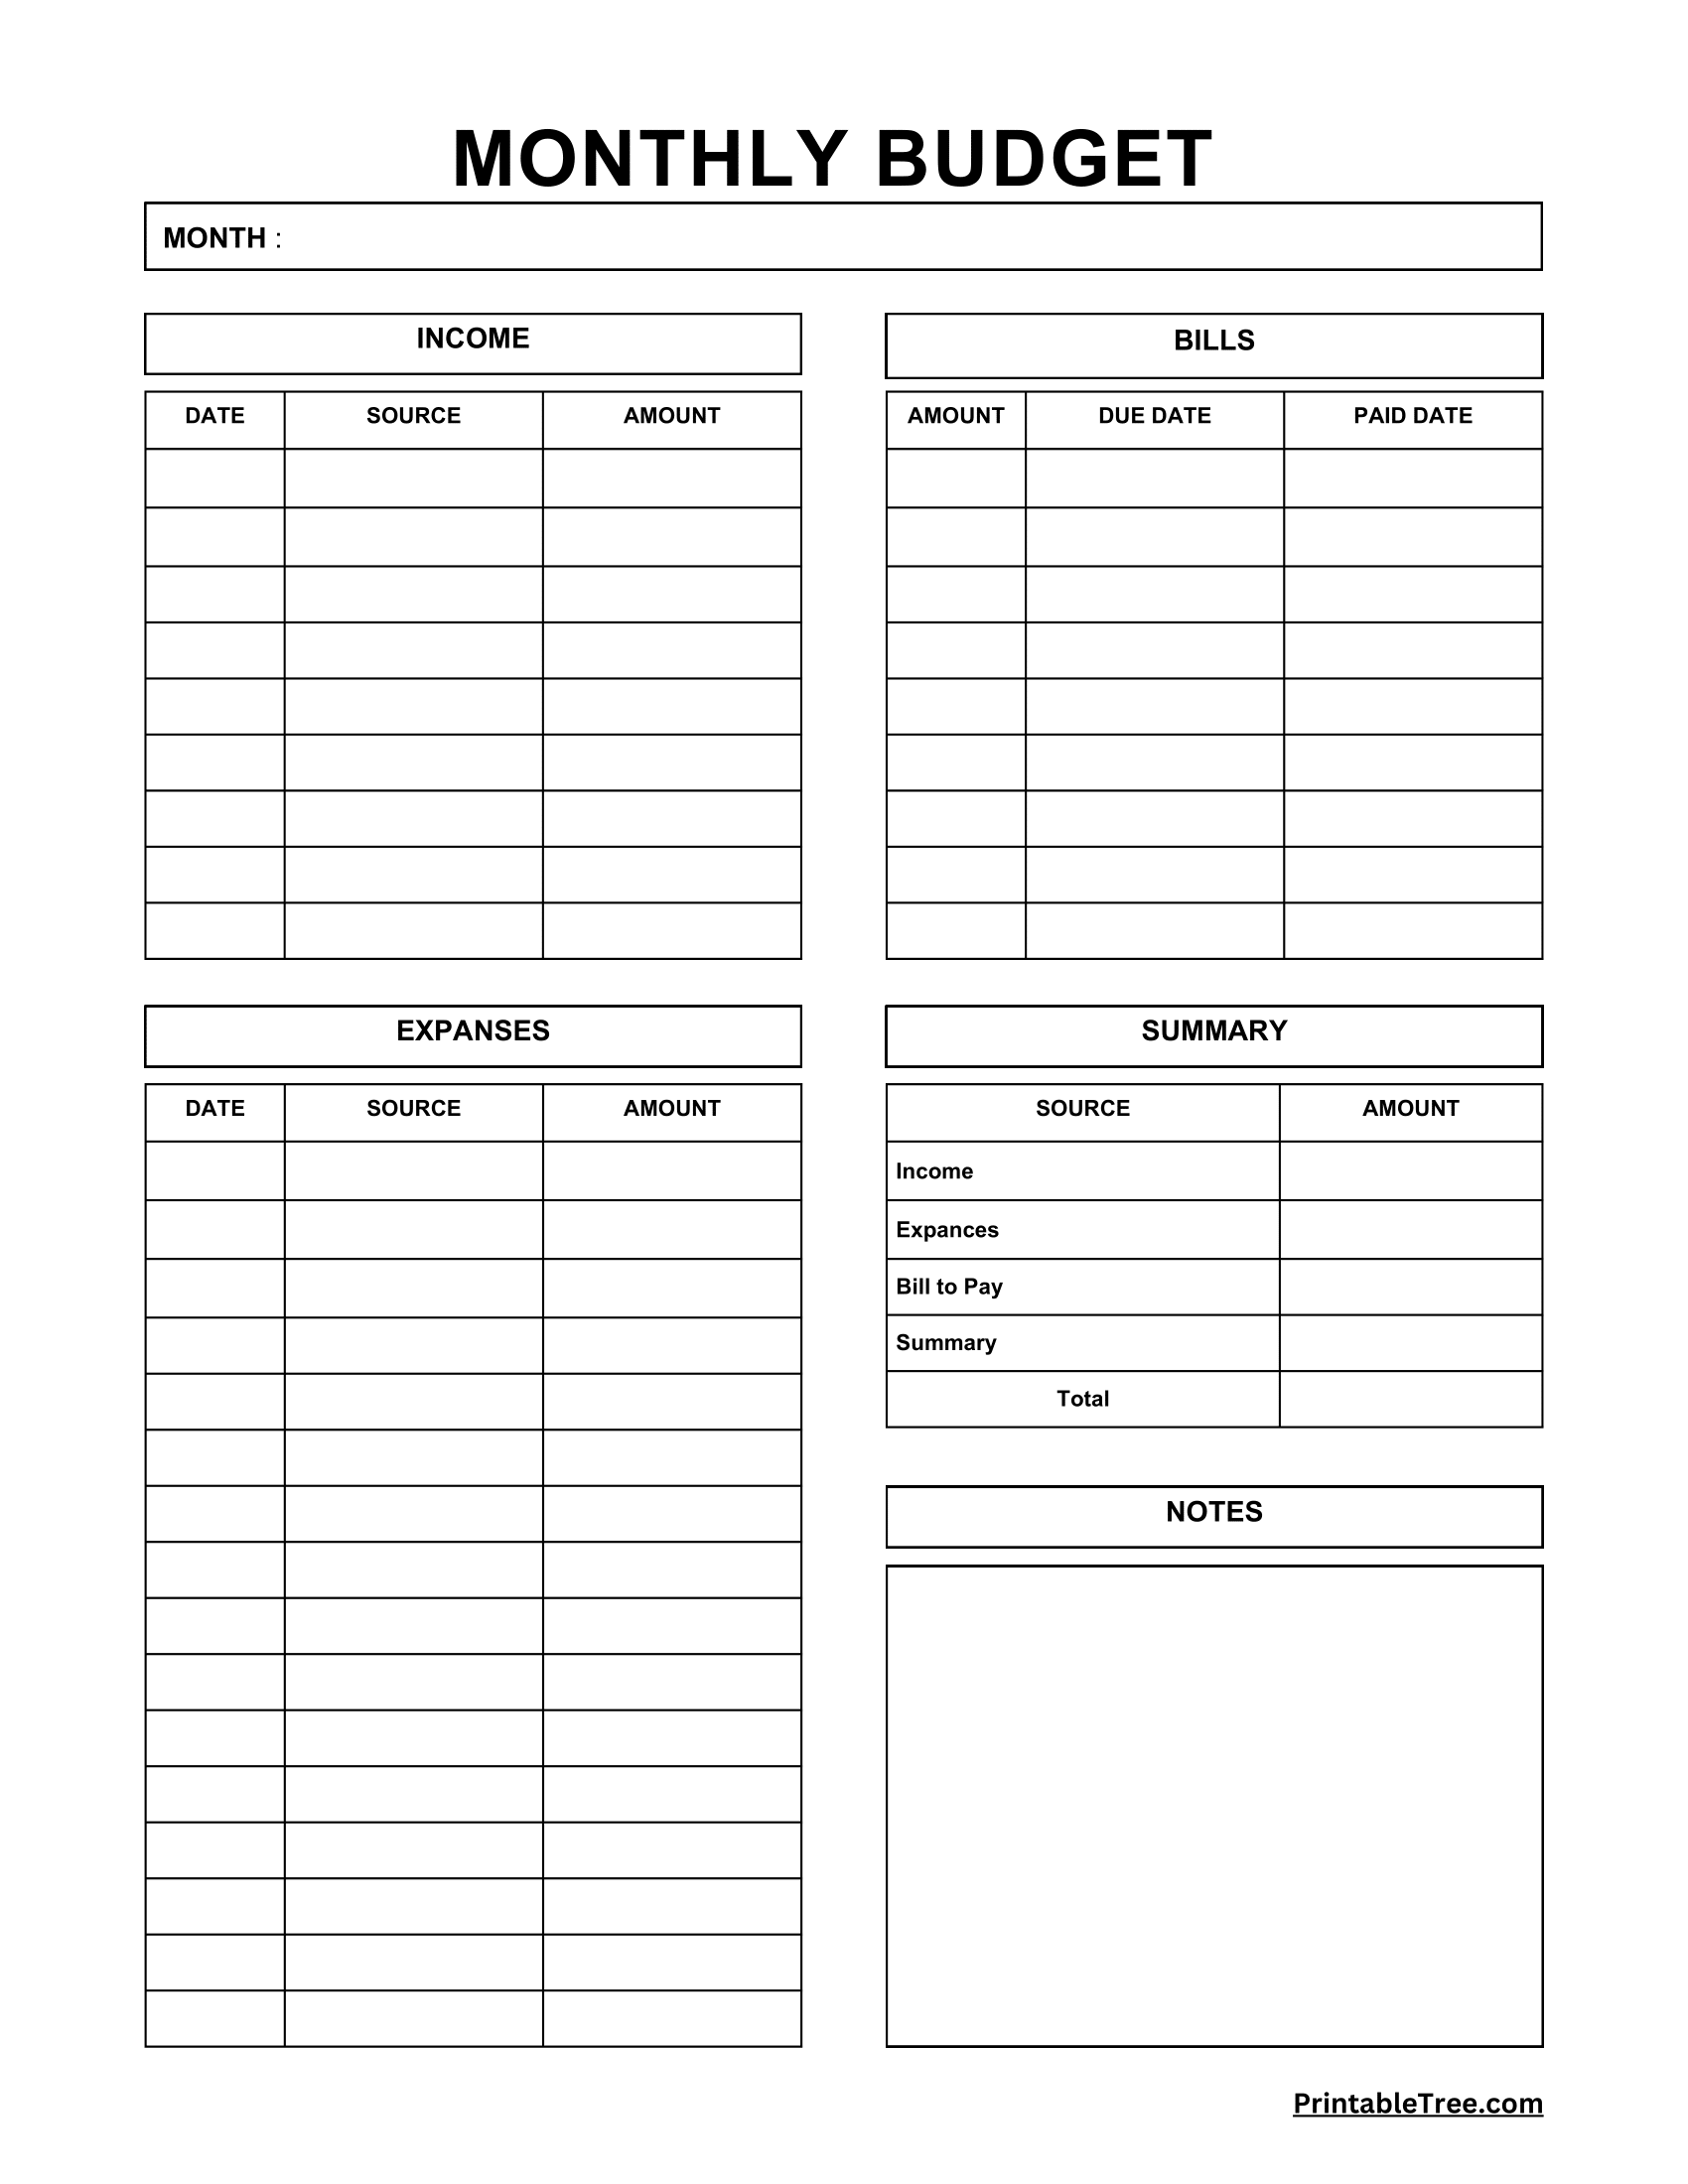 daily schedule planner pdf budget list pdf